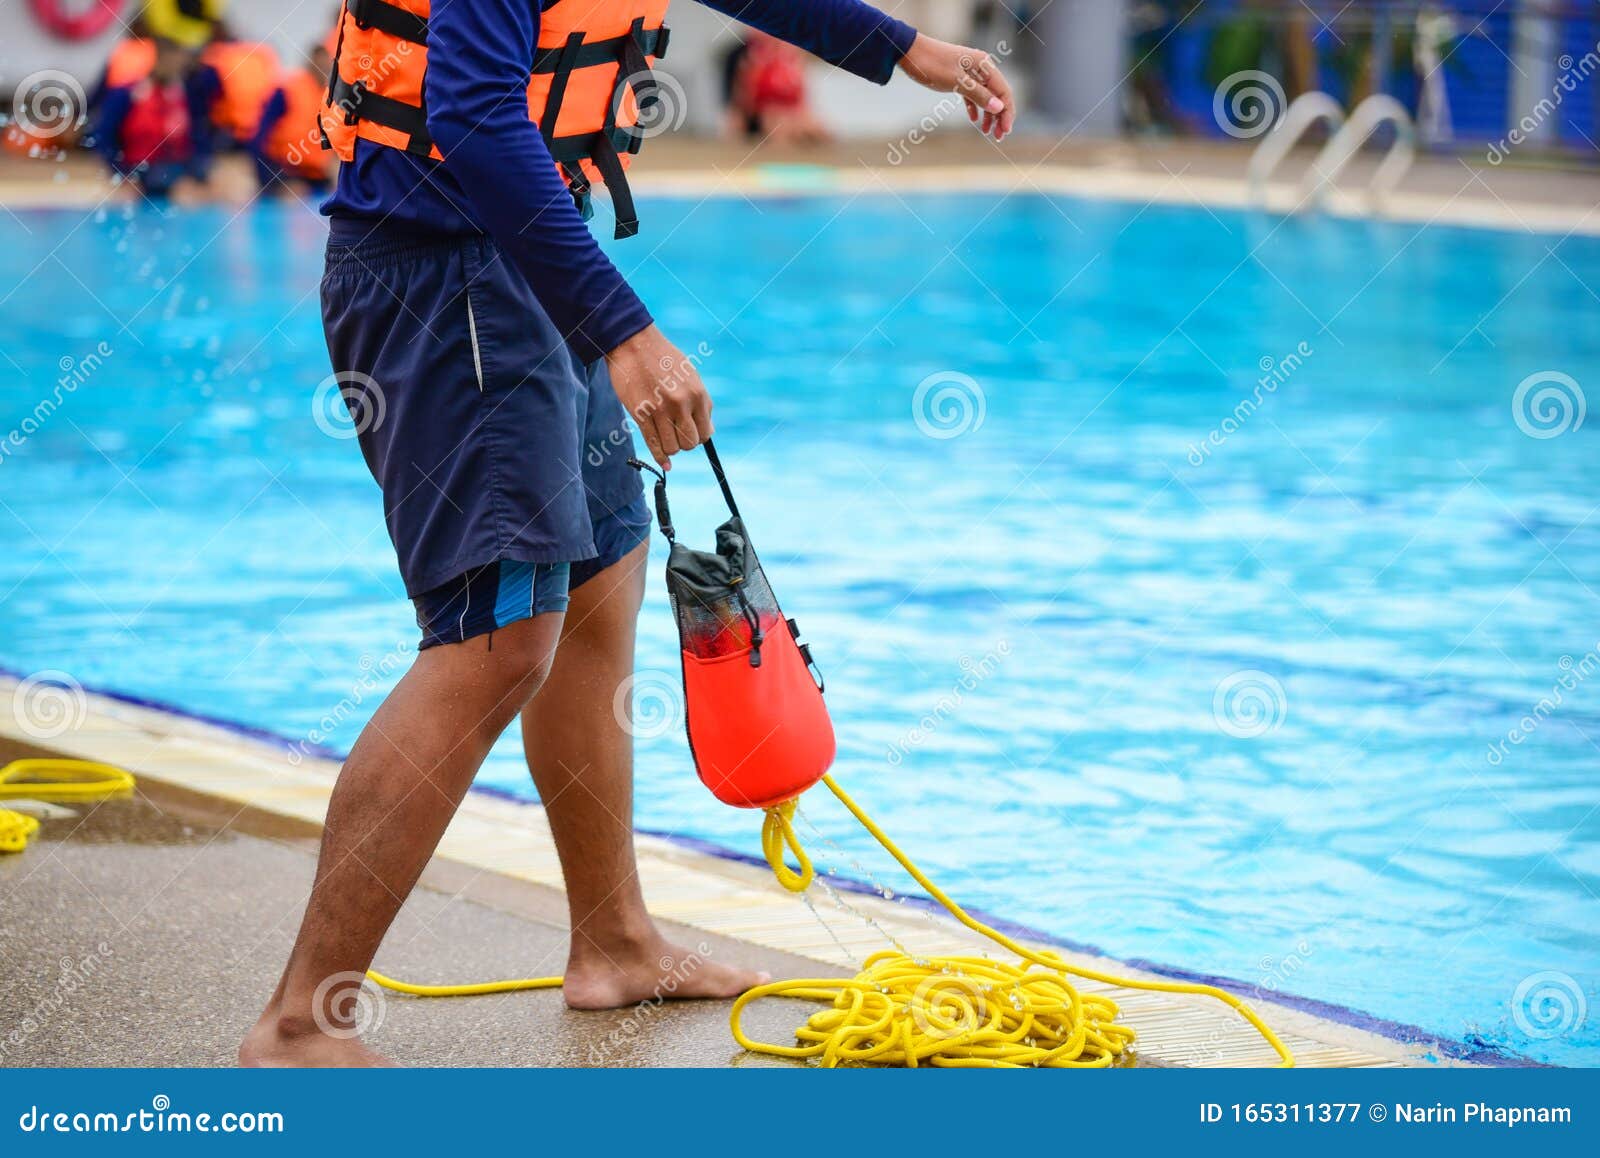 Lifeguard Training Use Throw Bag Stock Image - Image of rope, ring